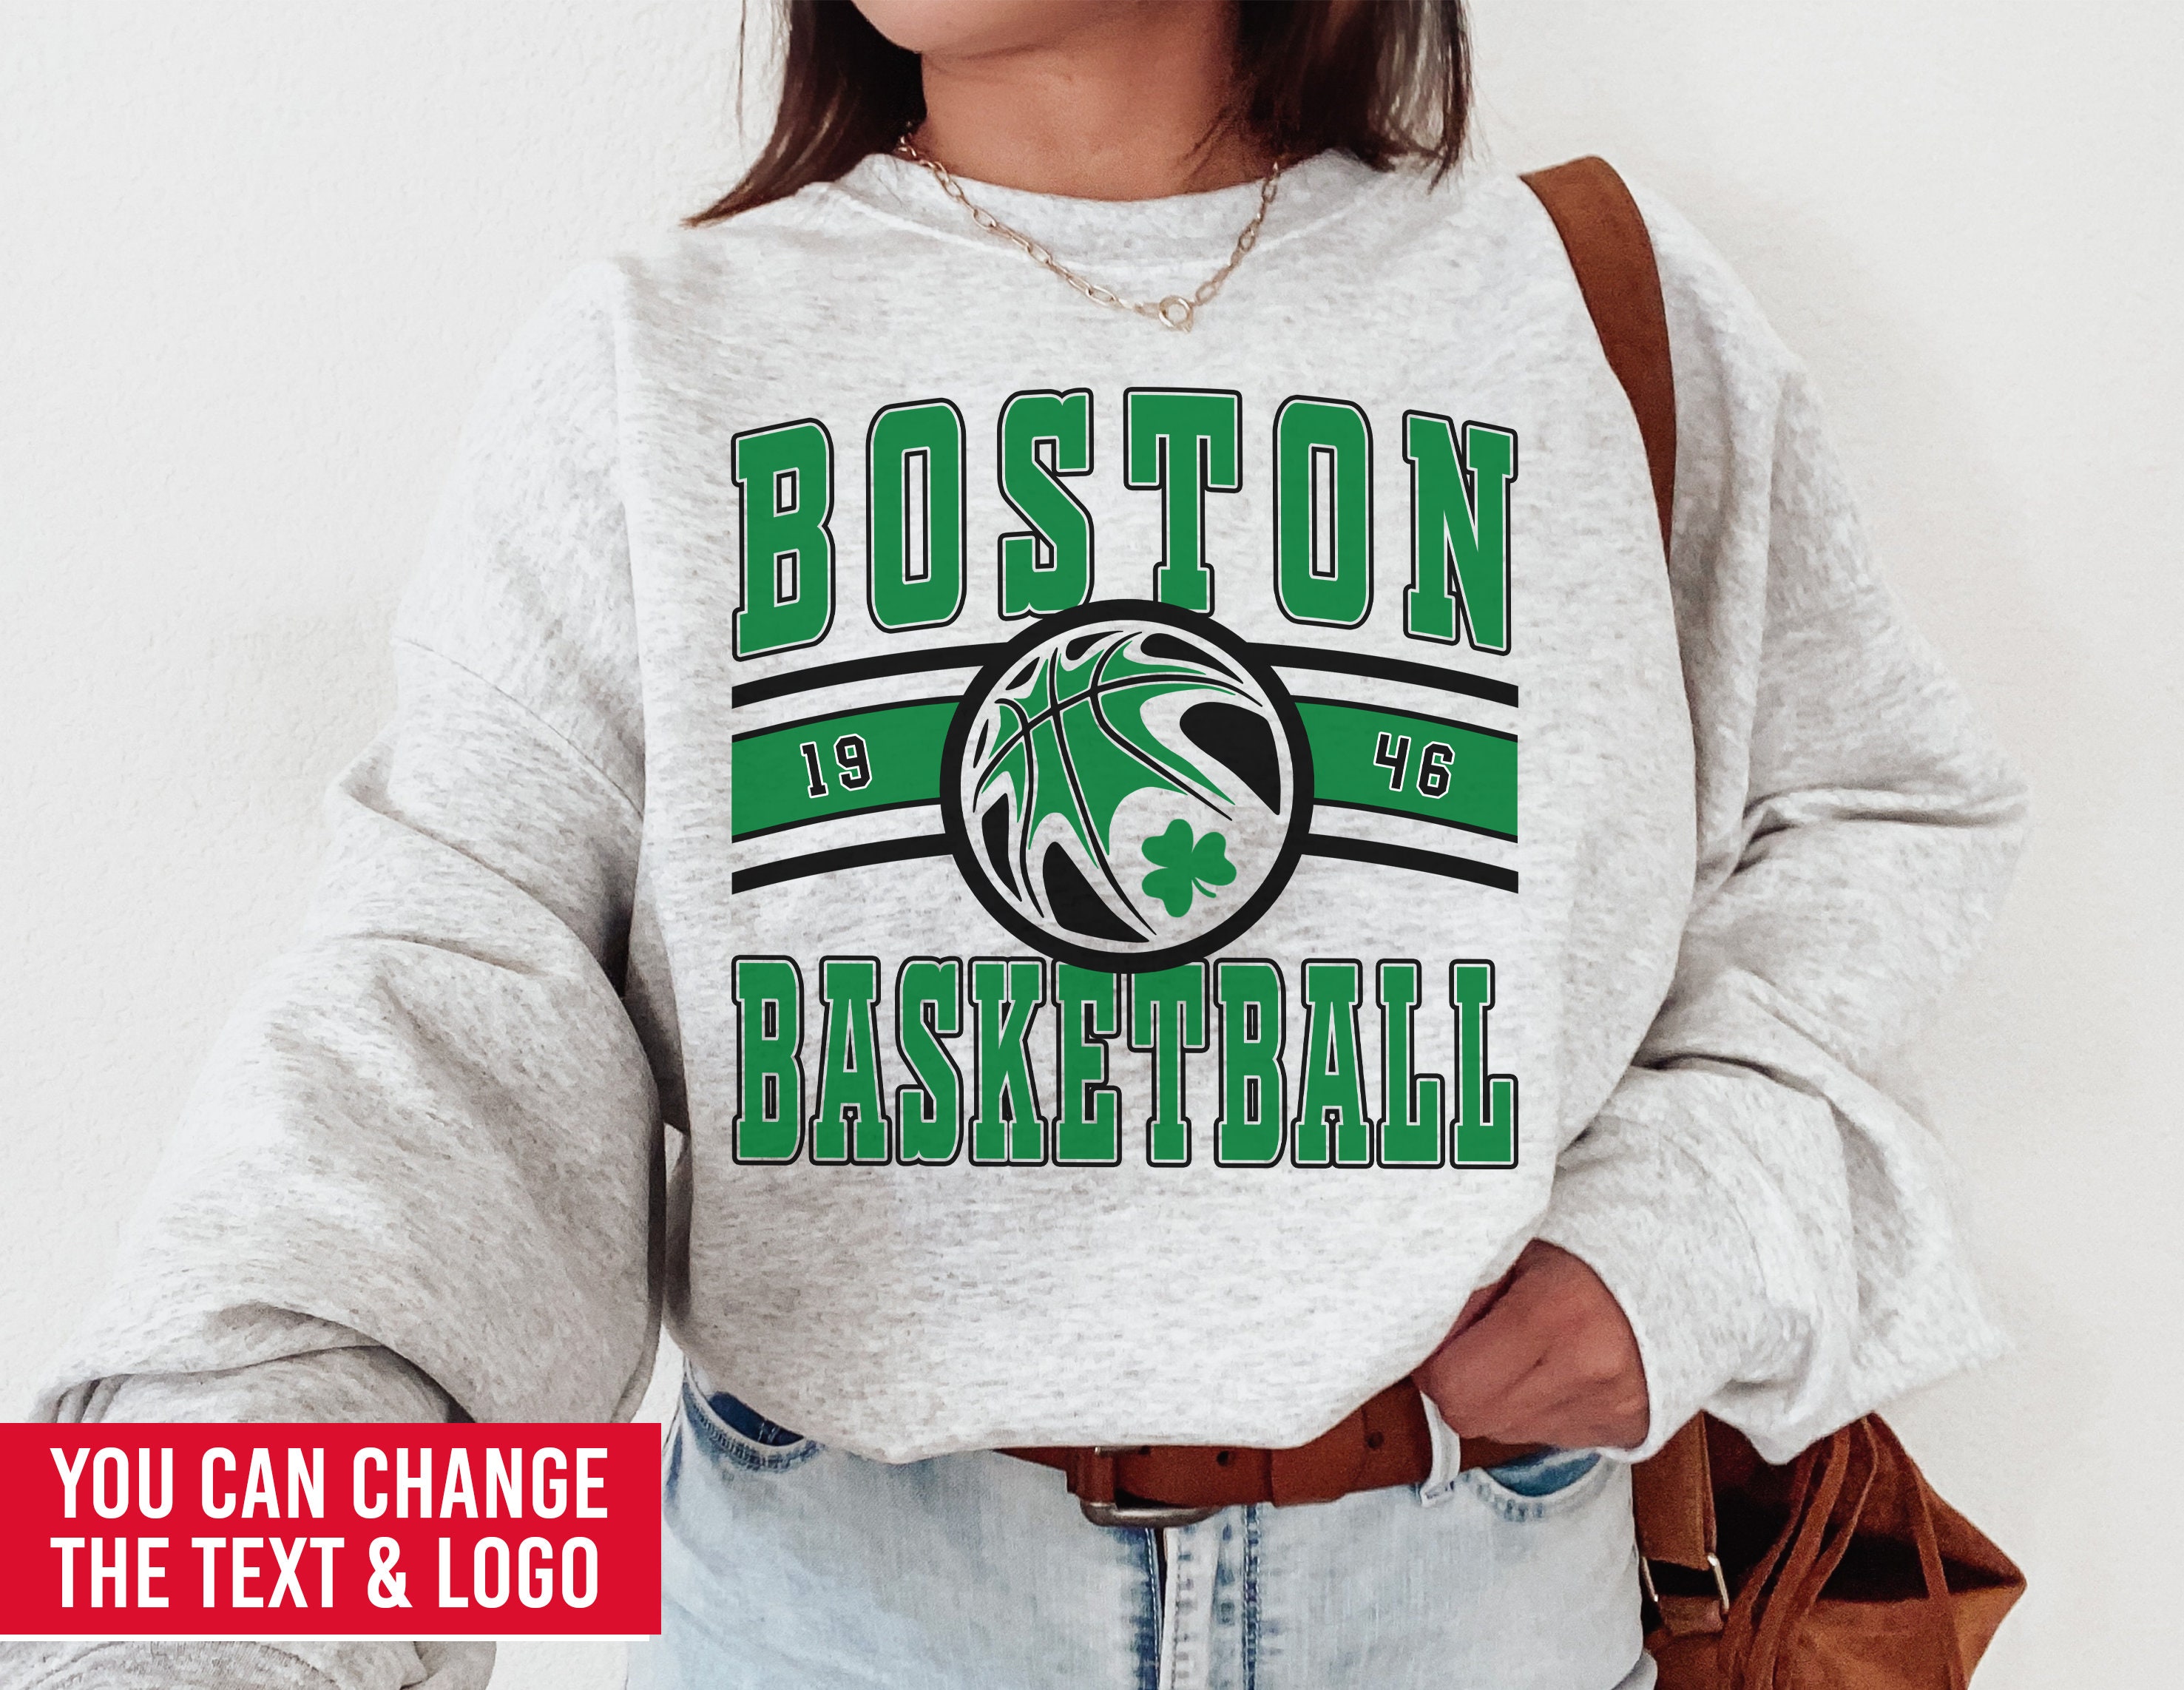 Celtics Al Horford T Shirts - Lentaze